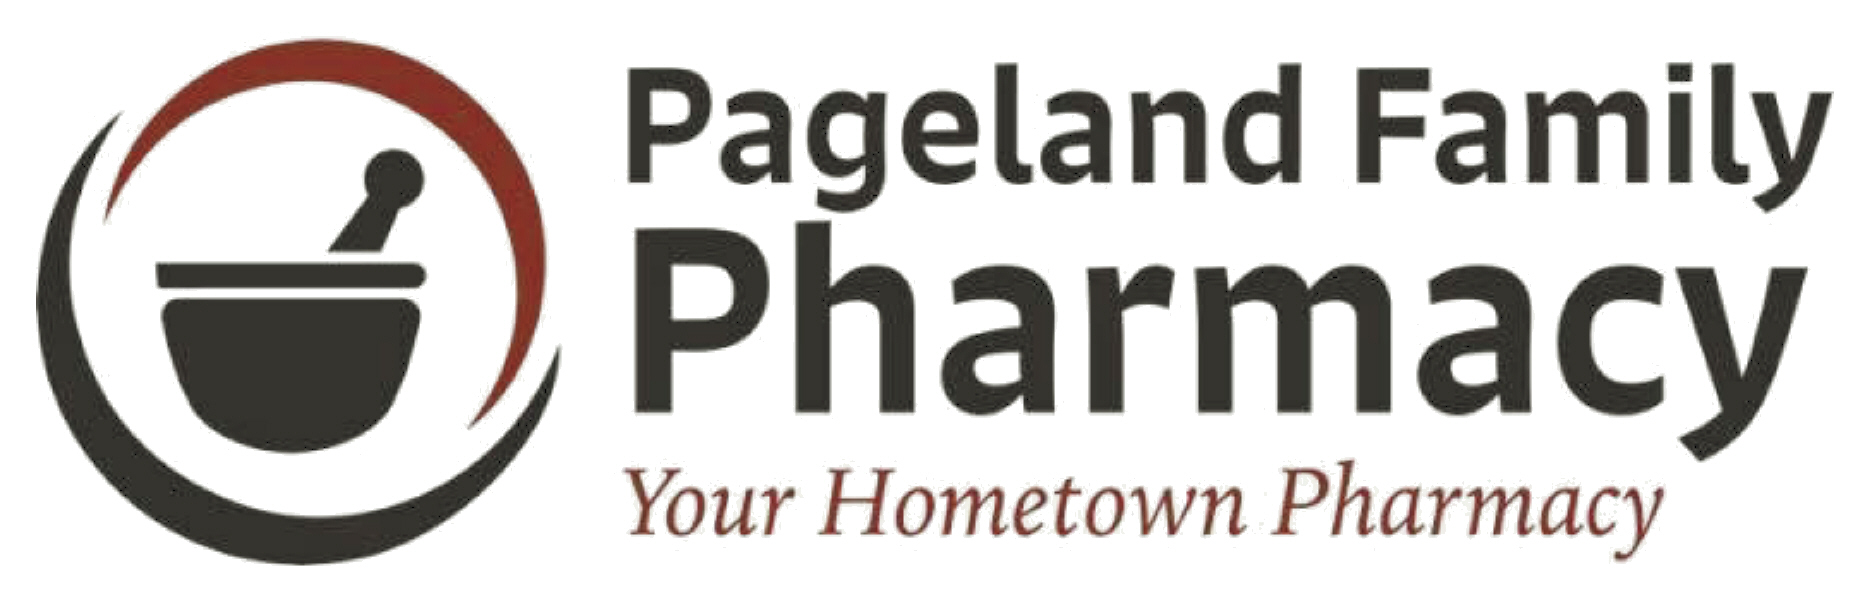 Pageland Family Pharmacy